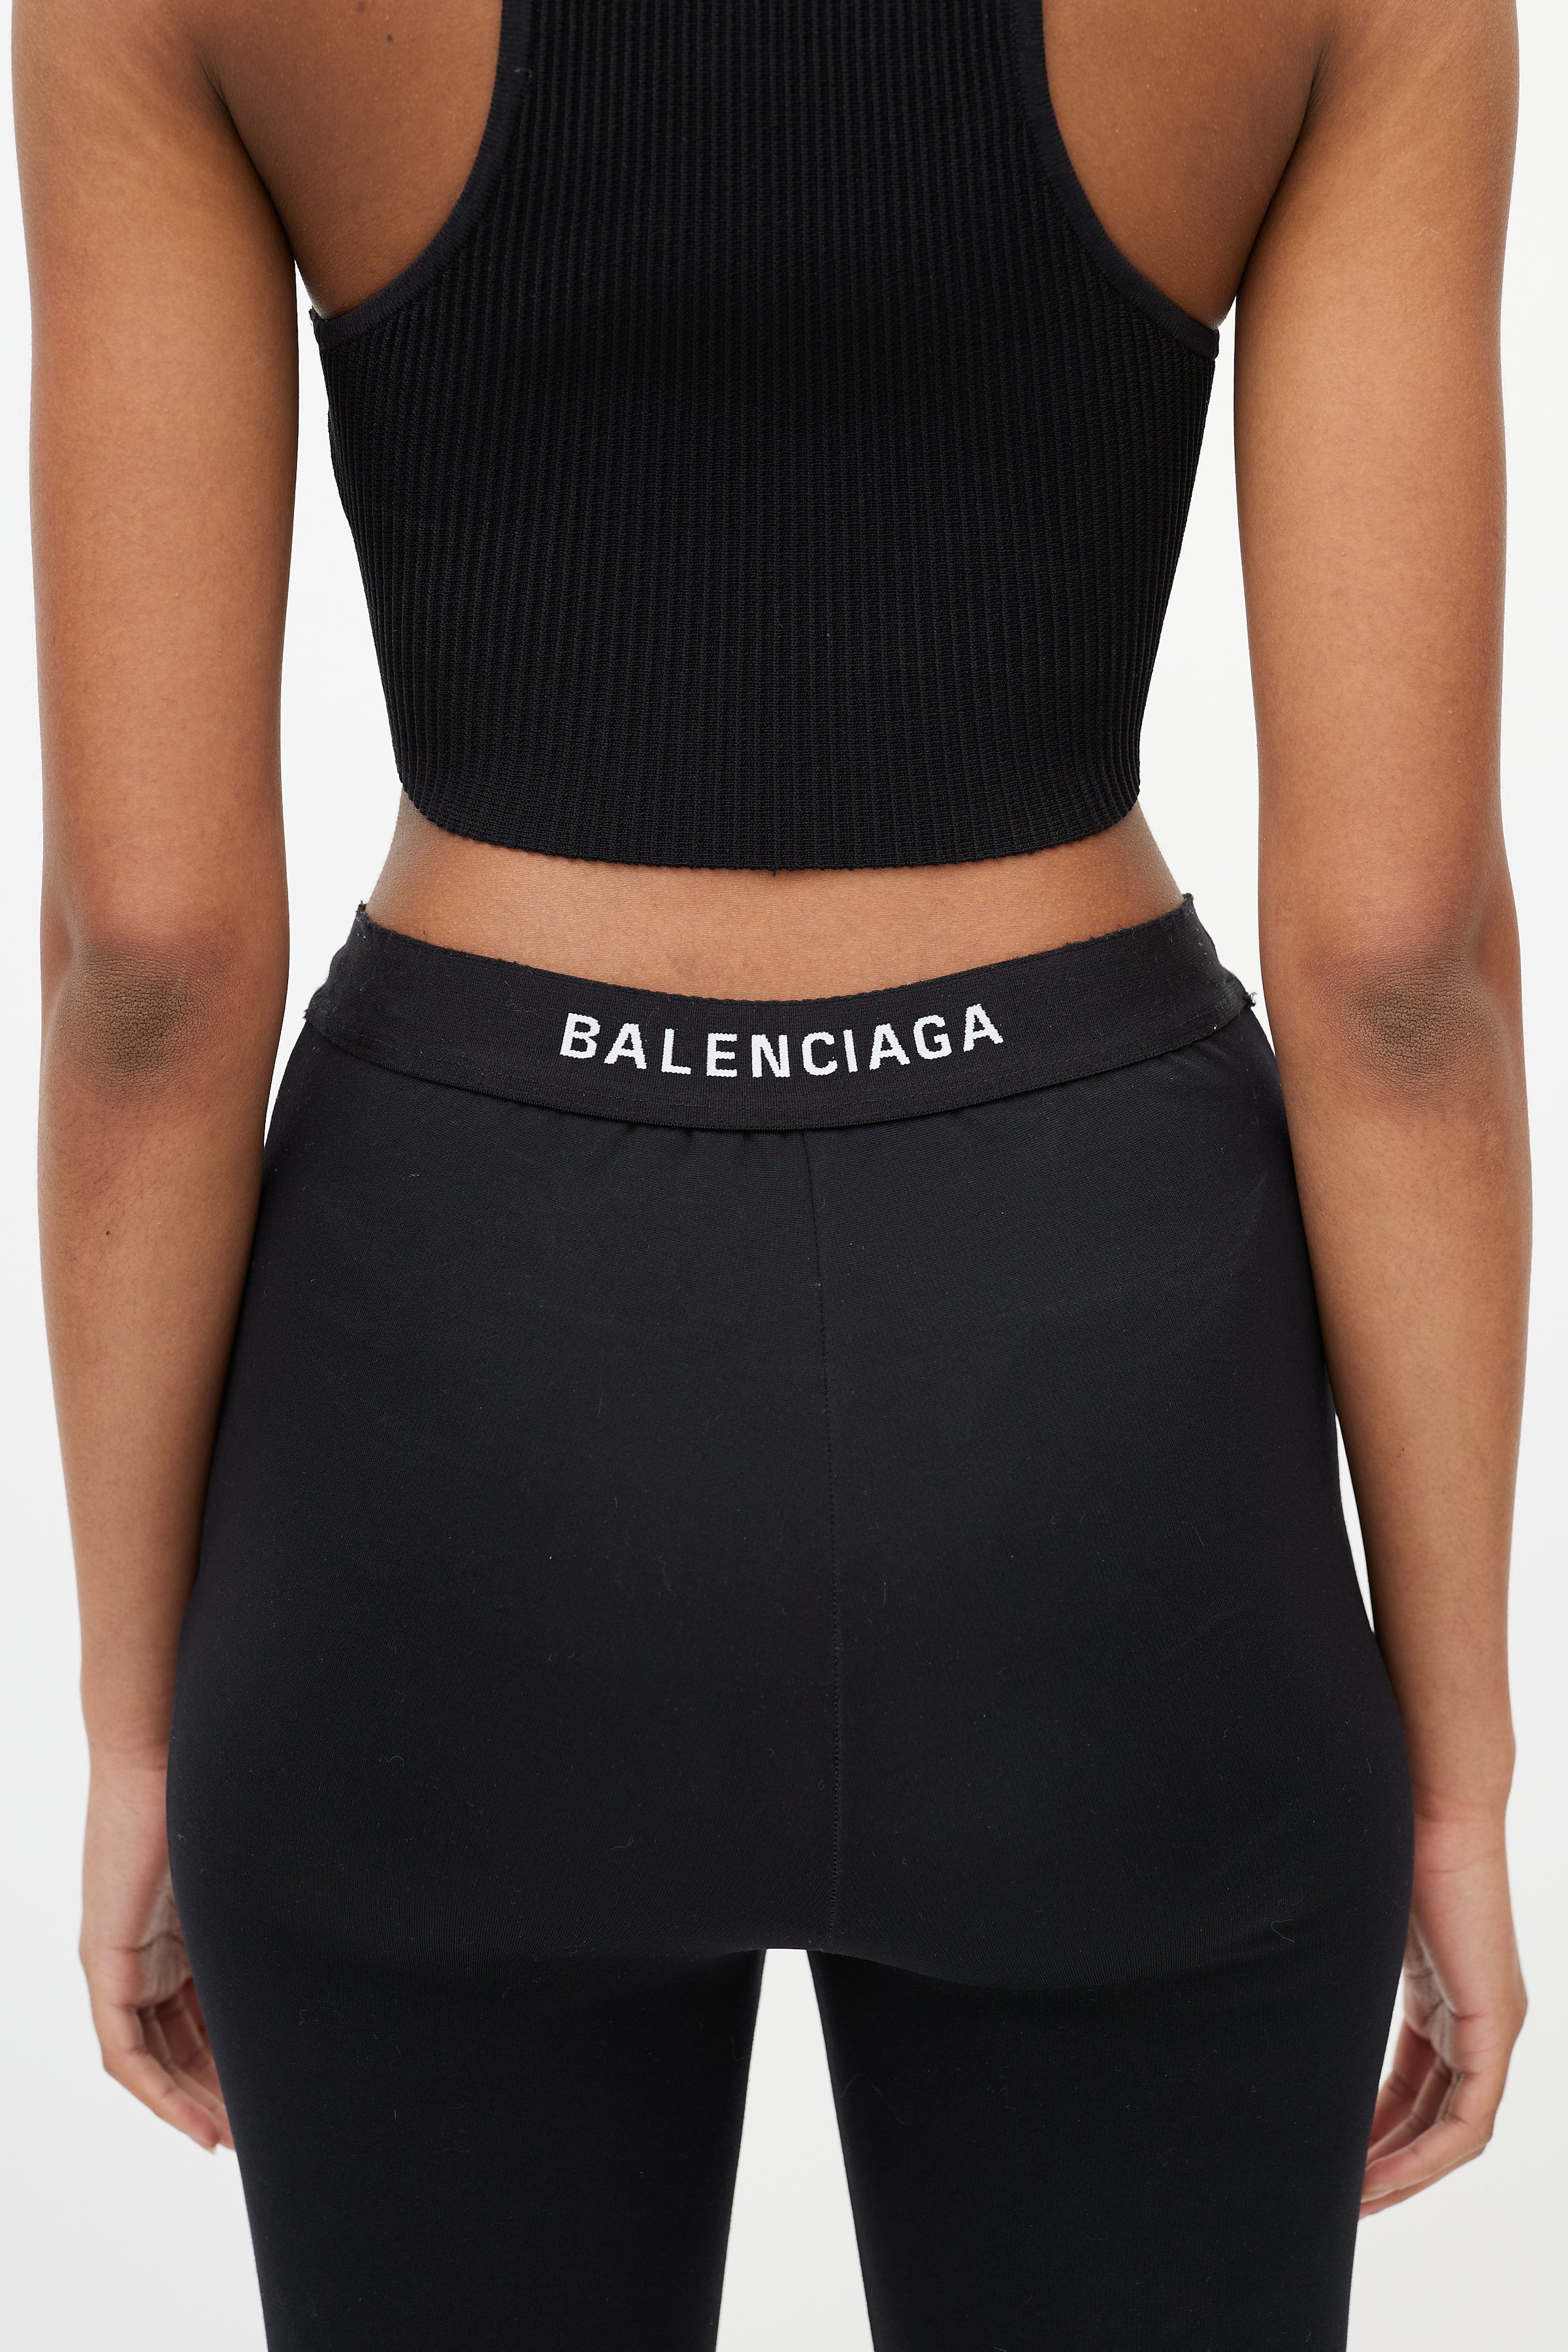 Balenciaga Leggings & Sports Leggings for Women